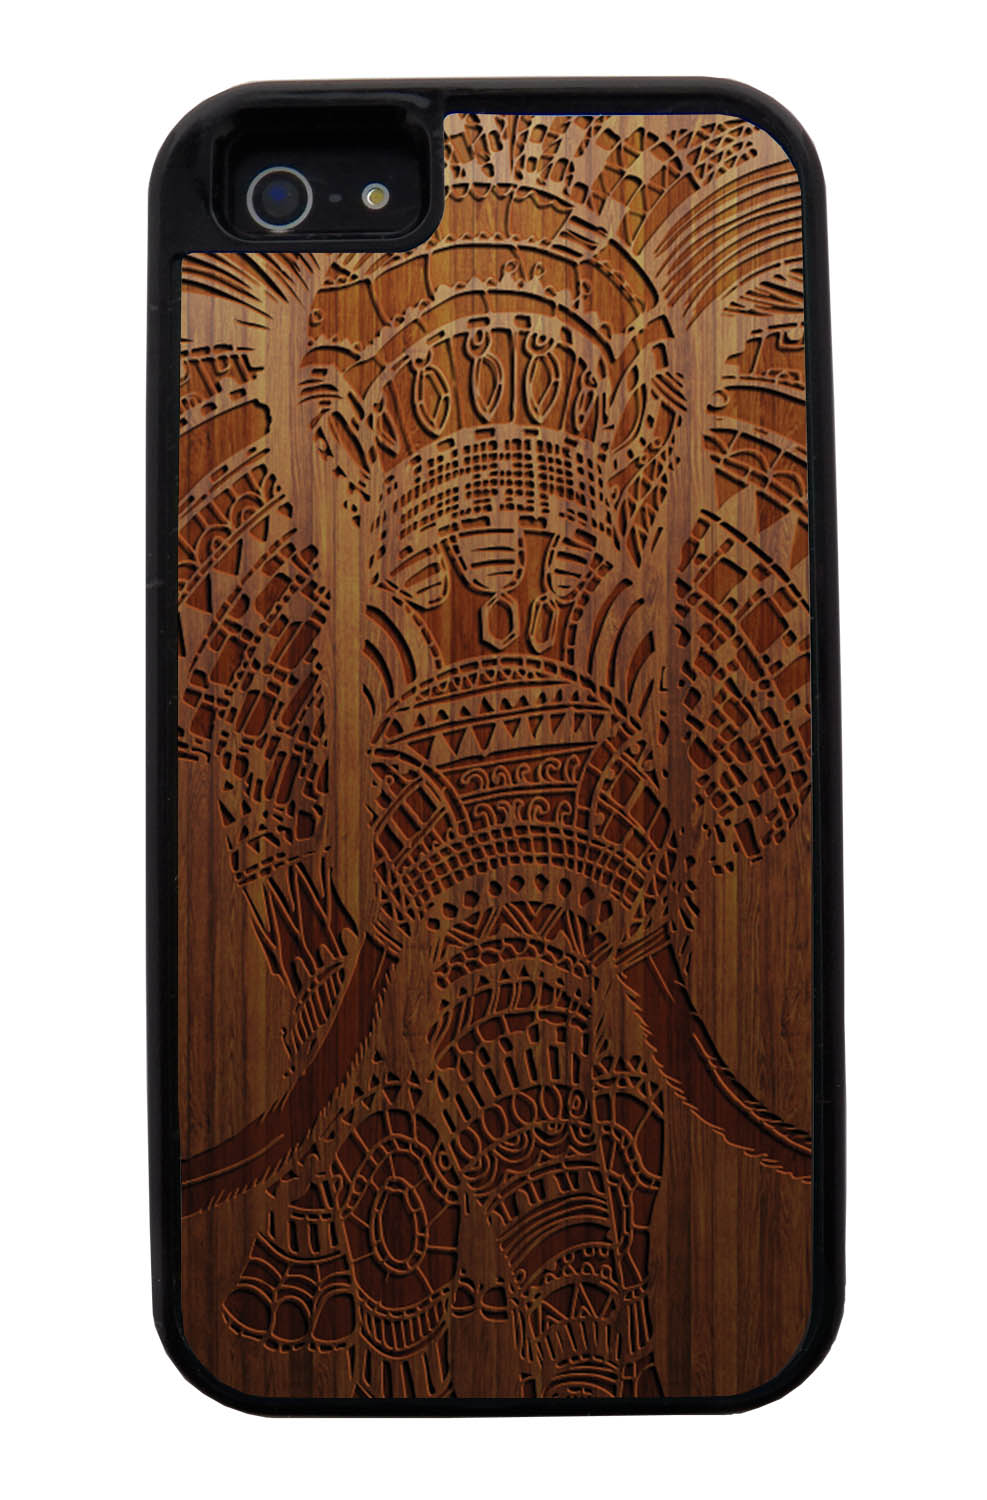 Apple iPhone 5 / 5S Aztec Case - Simulated Oak Wood Engraving